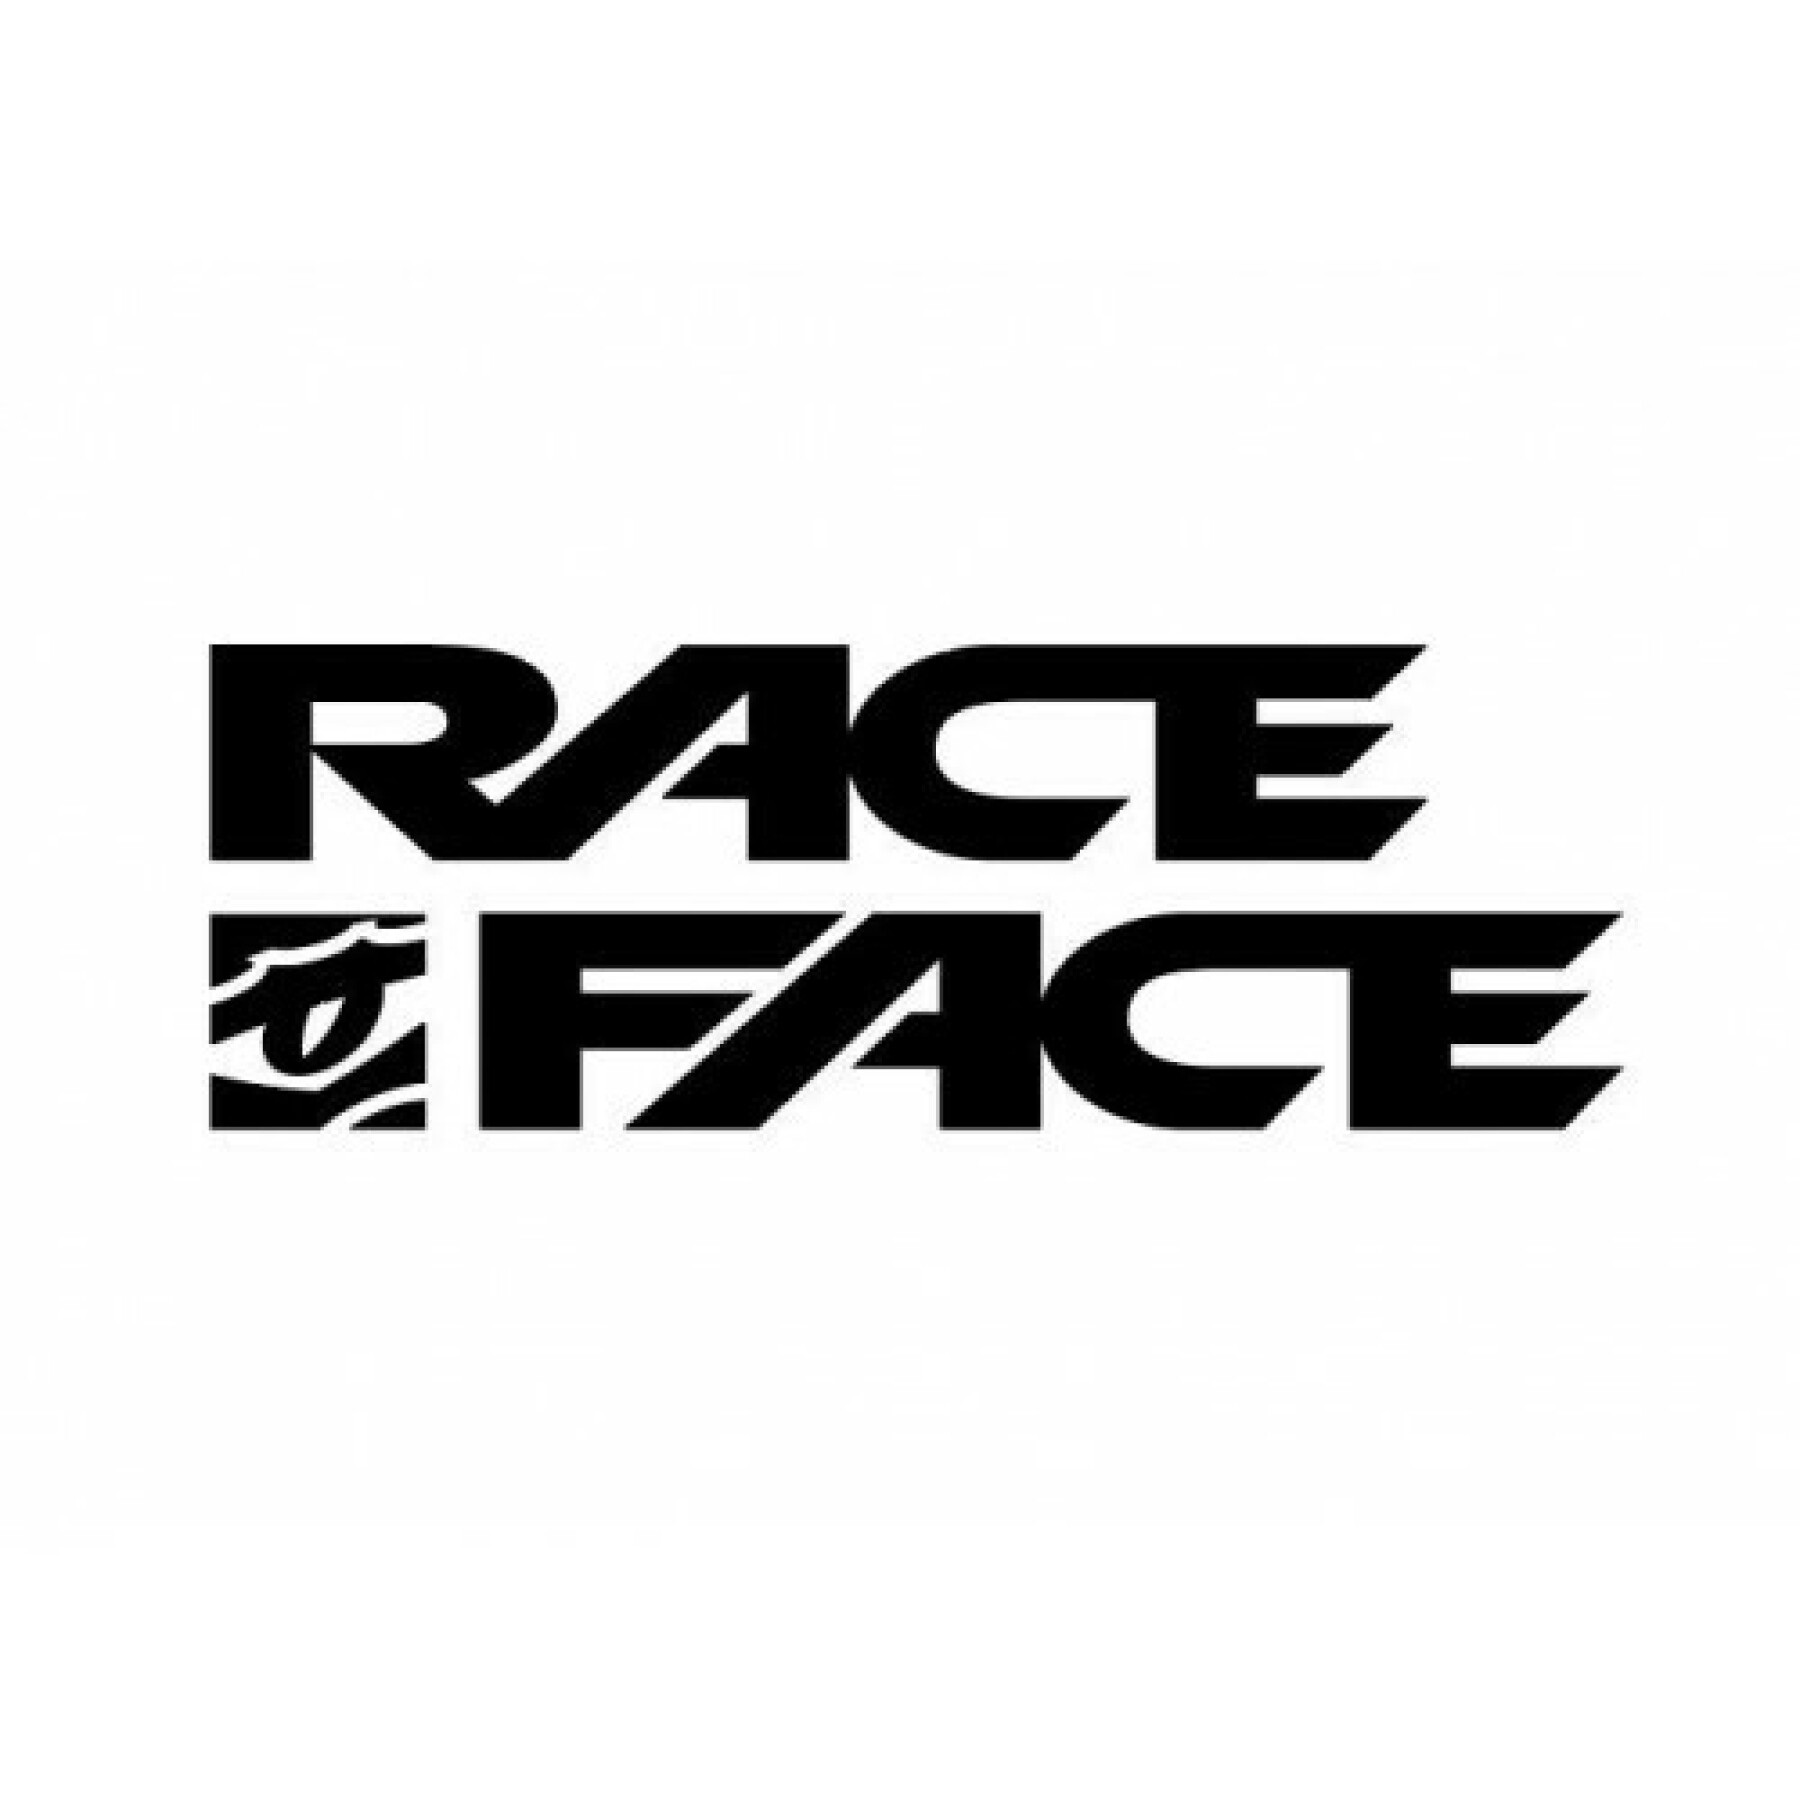 Orla Race Face arc offset - 35 - 29 - 28t